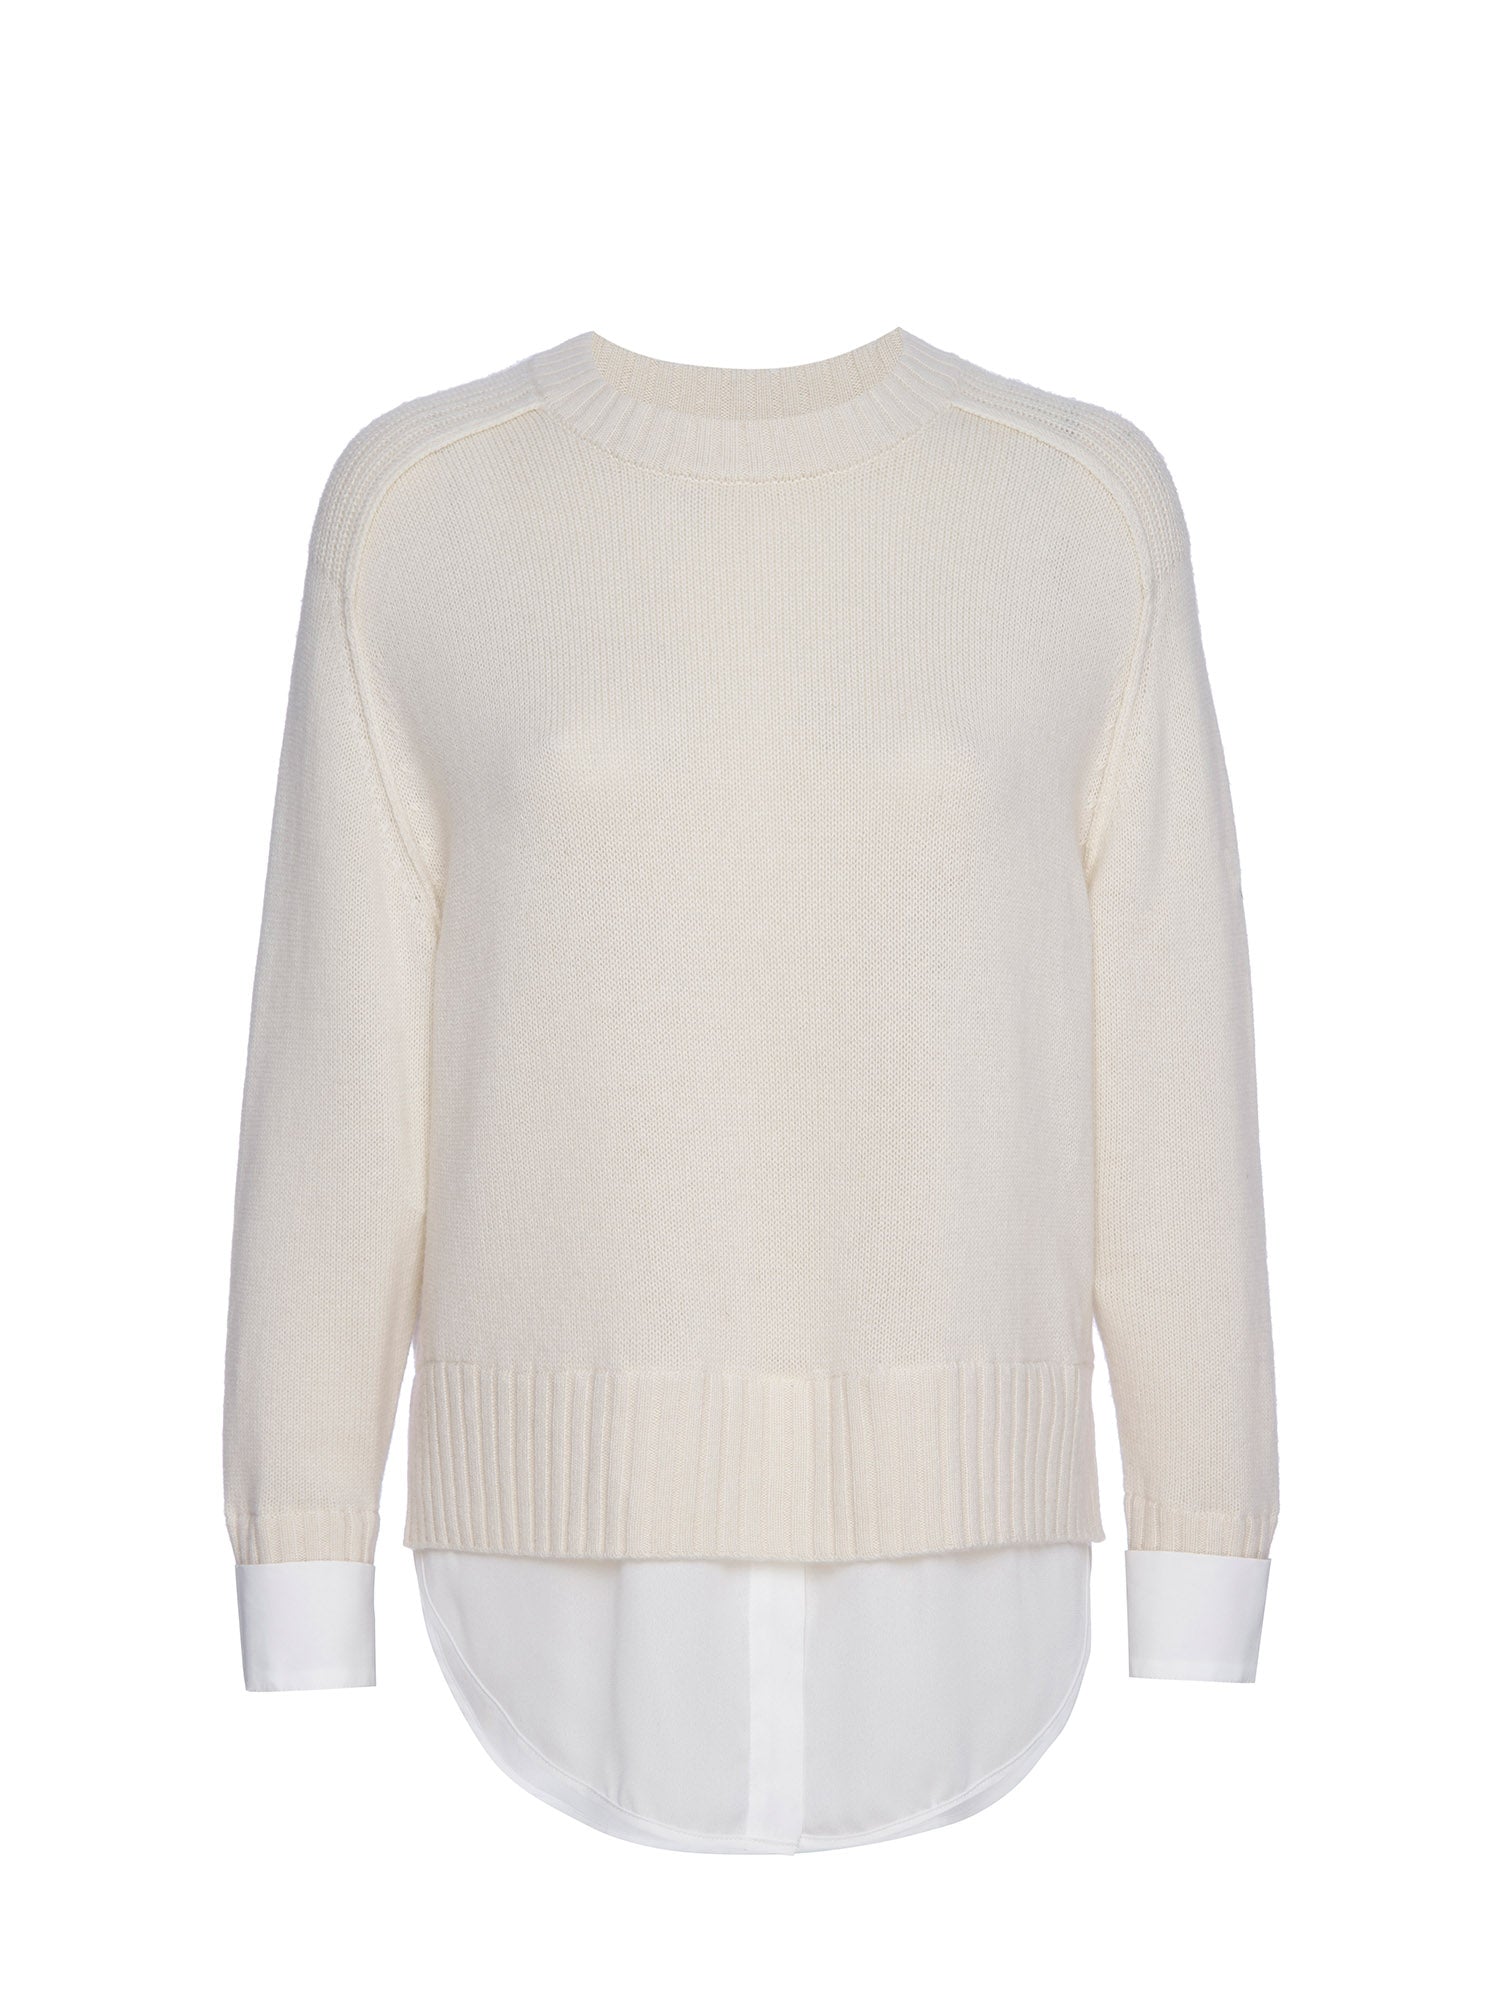 Parson cashmere-wool layered crewneck white sweater flat view